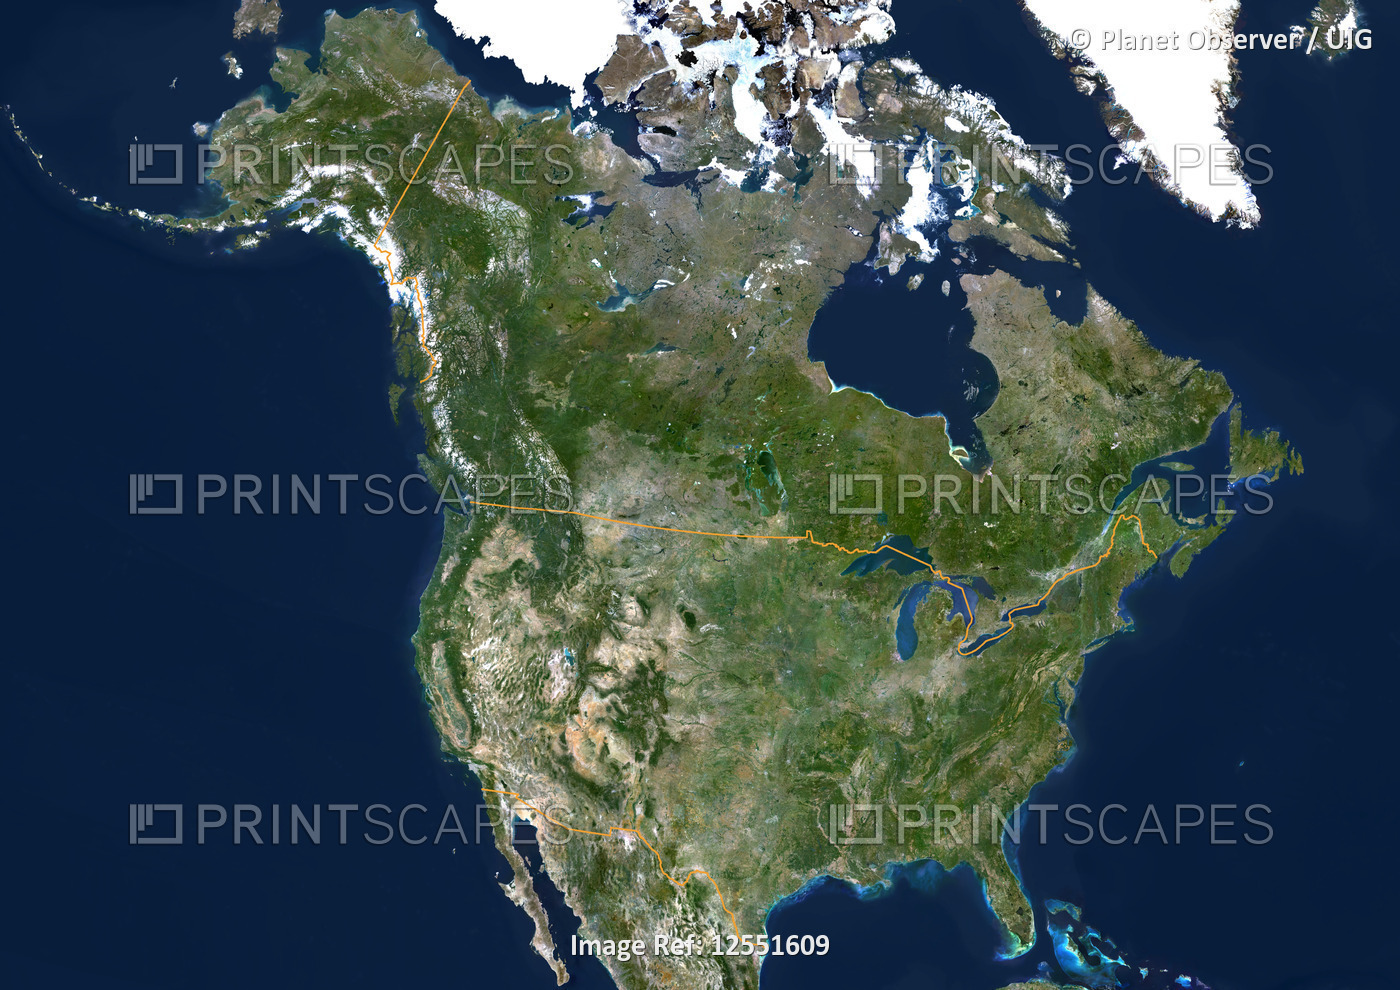 United States (Alaska Incl.), True Colour Satellite Image With Border. USA (Alaska incl.) and Canada